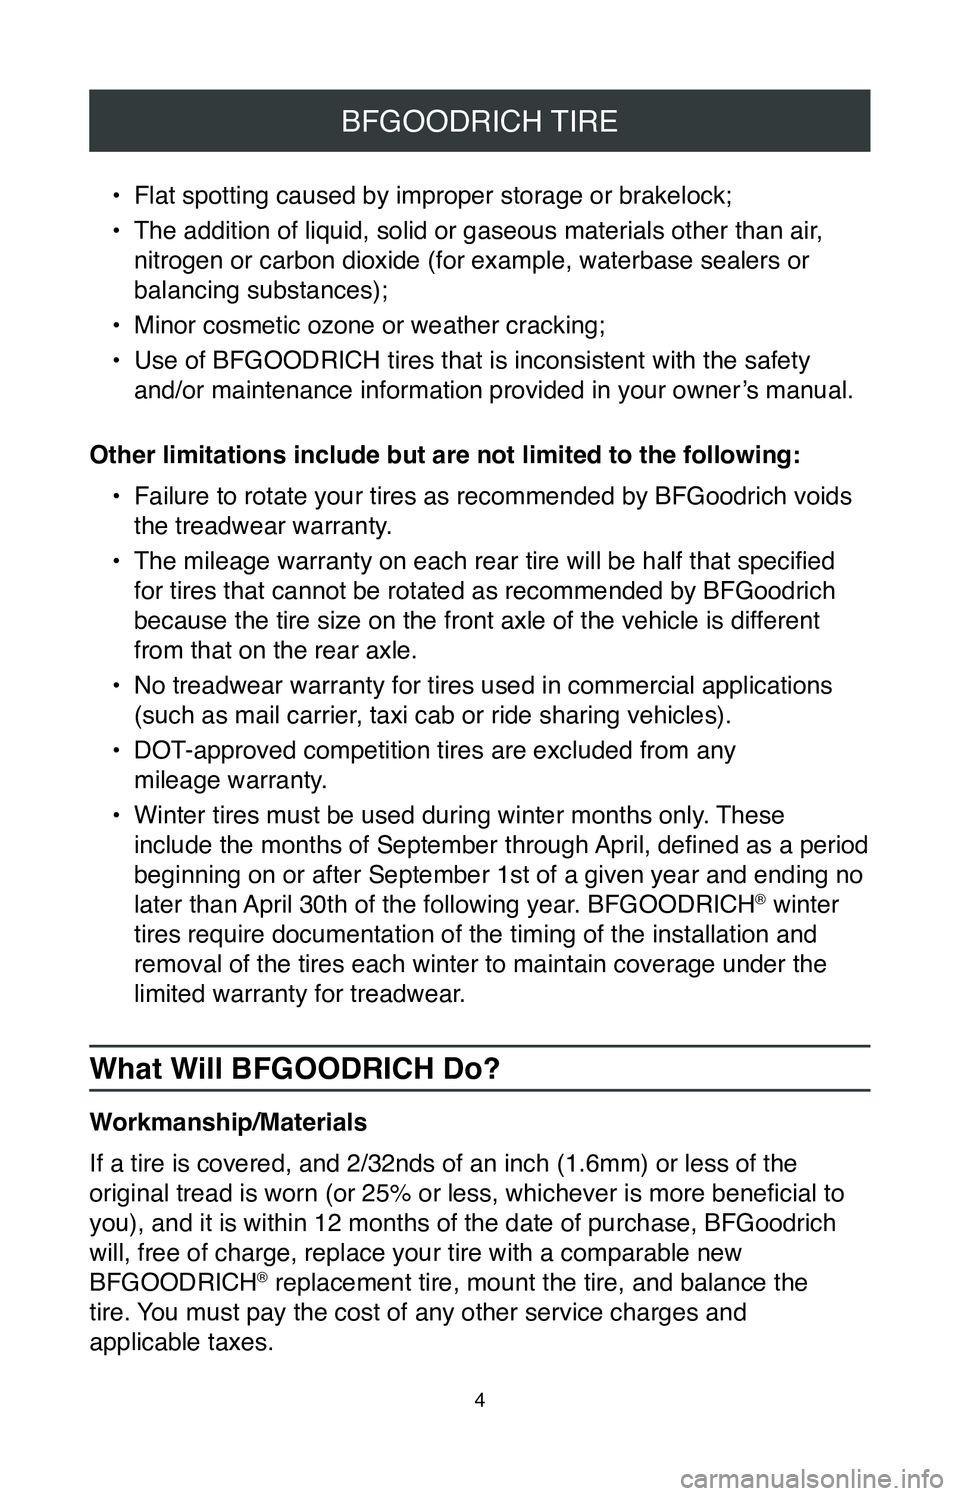 TOYOTA AVALON 2020  Warranties & Maintenance Guides (in English) 4
BFGOODRICH TIRE
